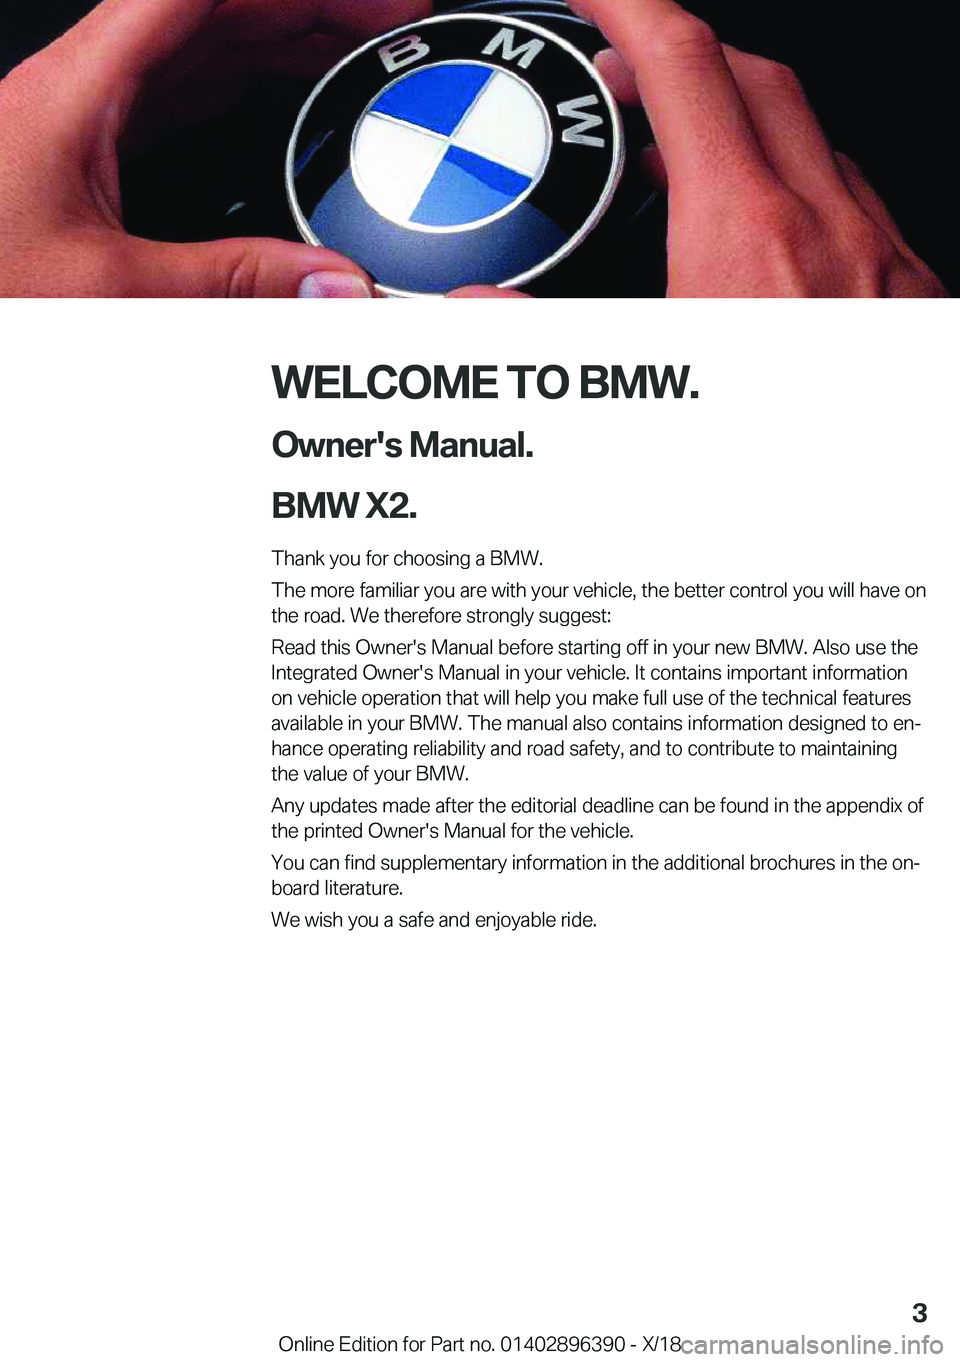 BMW X2 2019  Owners Manual �W�E�L�C�O�M�E��T�O��B�M�W�.�O�w�n�e�r�'�s��M�a�n�u�a�l�.
�B�M�W��X�2�.
�T�h�a�n�k��y�o�u��f�o�r��c�h�o�o�s�i�n�g��a��B�M�W�.
�T�h�e��m�o�r�e��f�a�m�i�l�i�a�r��y�o�u��a�r�e��w�i�t�h�